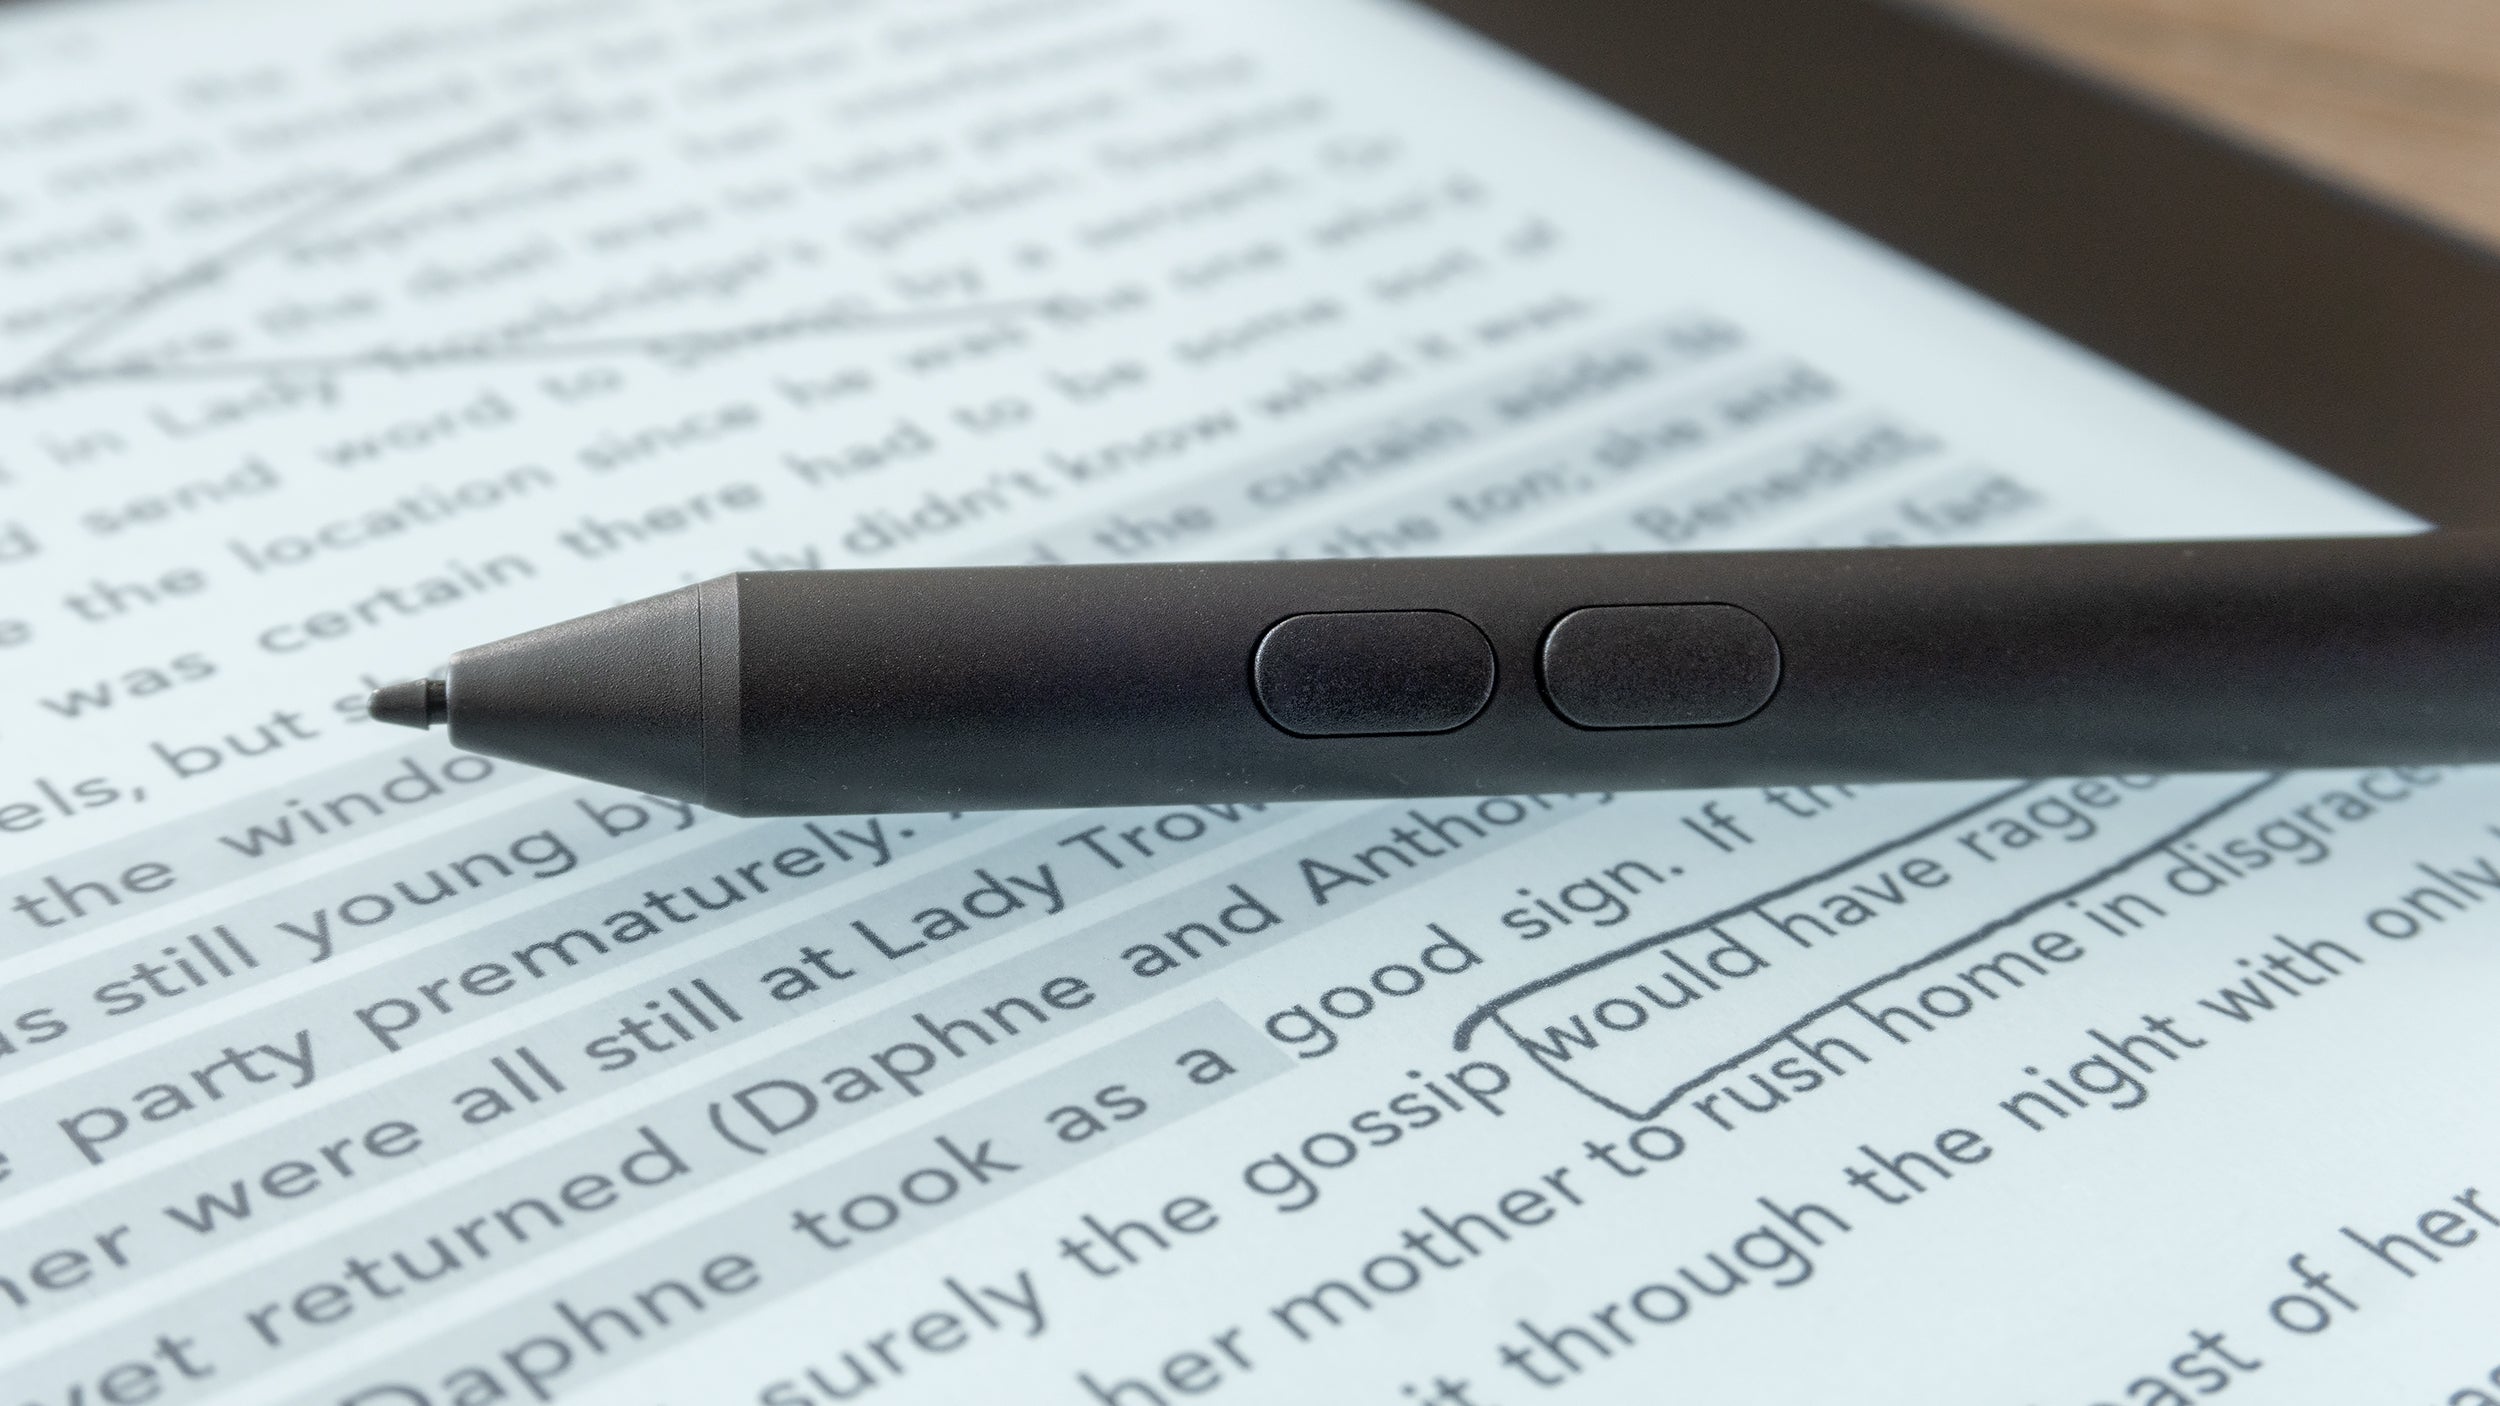 The Kobo Elipsa's included stylus includes two shortcut buttons for switching to erase or highlight modes. (Photo: Andrew Liszewski/Gizmodo)